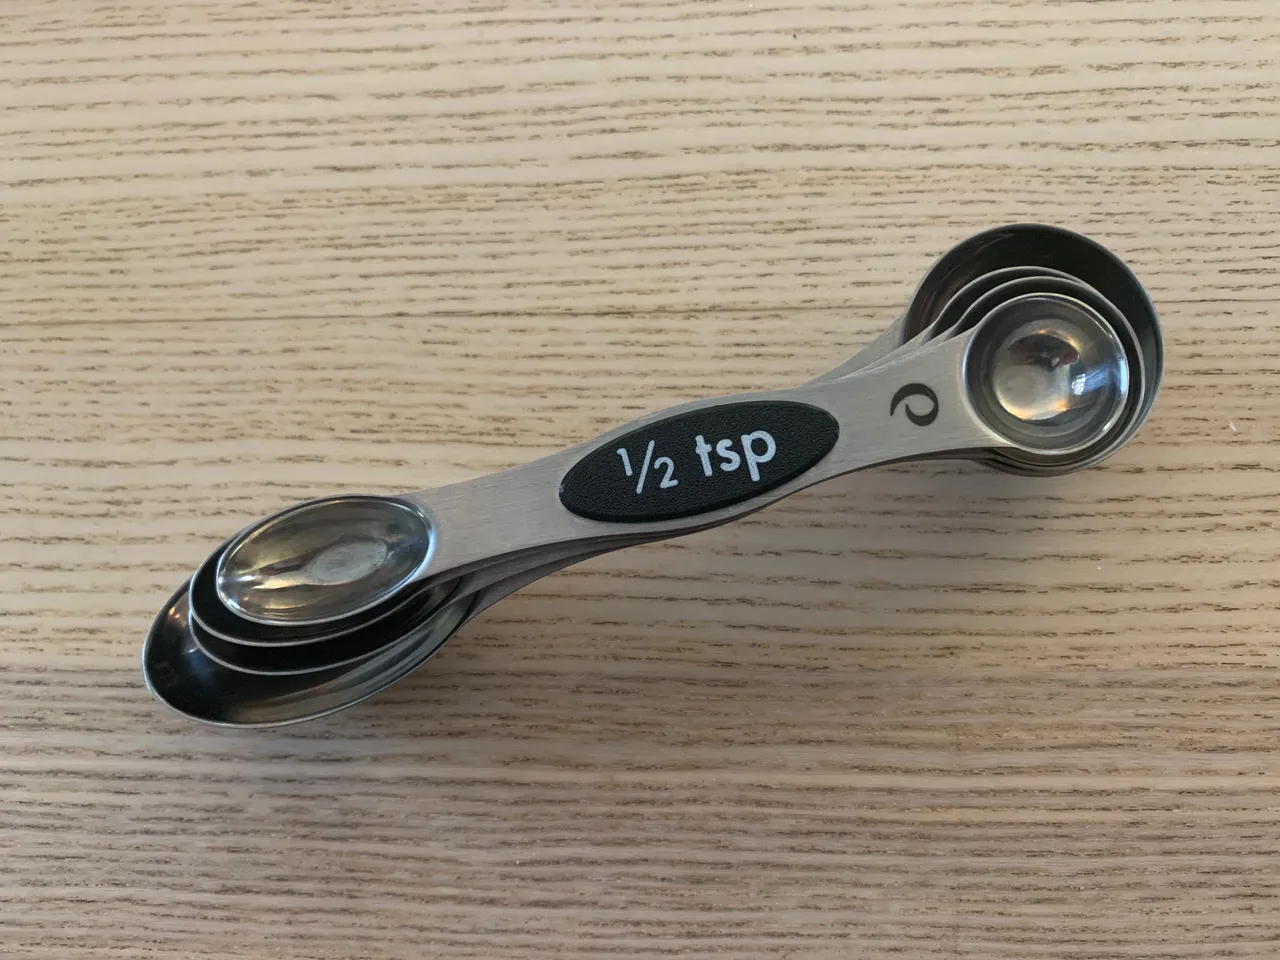 Progressive Magnetic Measuring Spoons